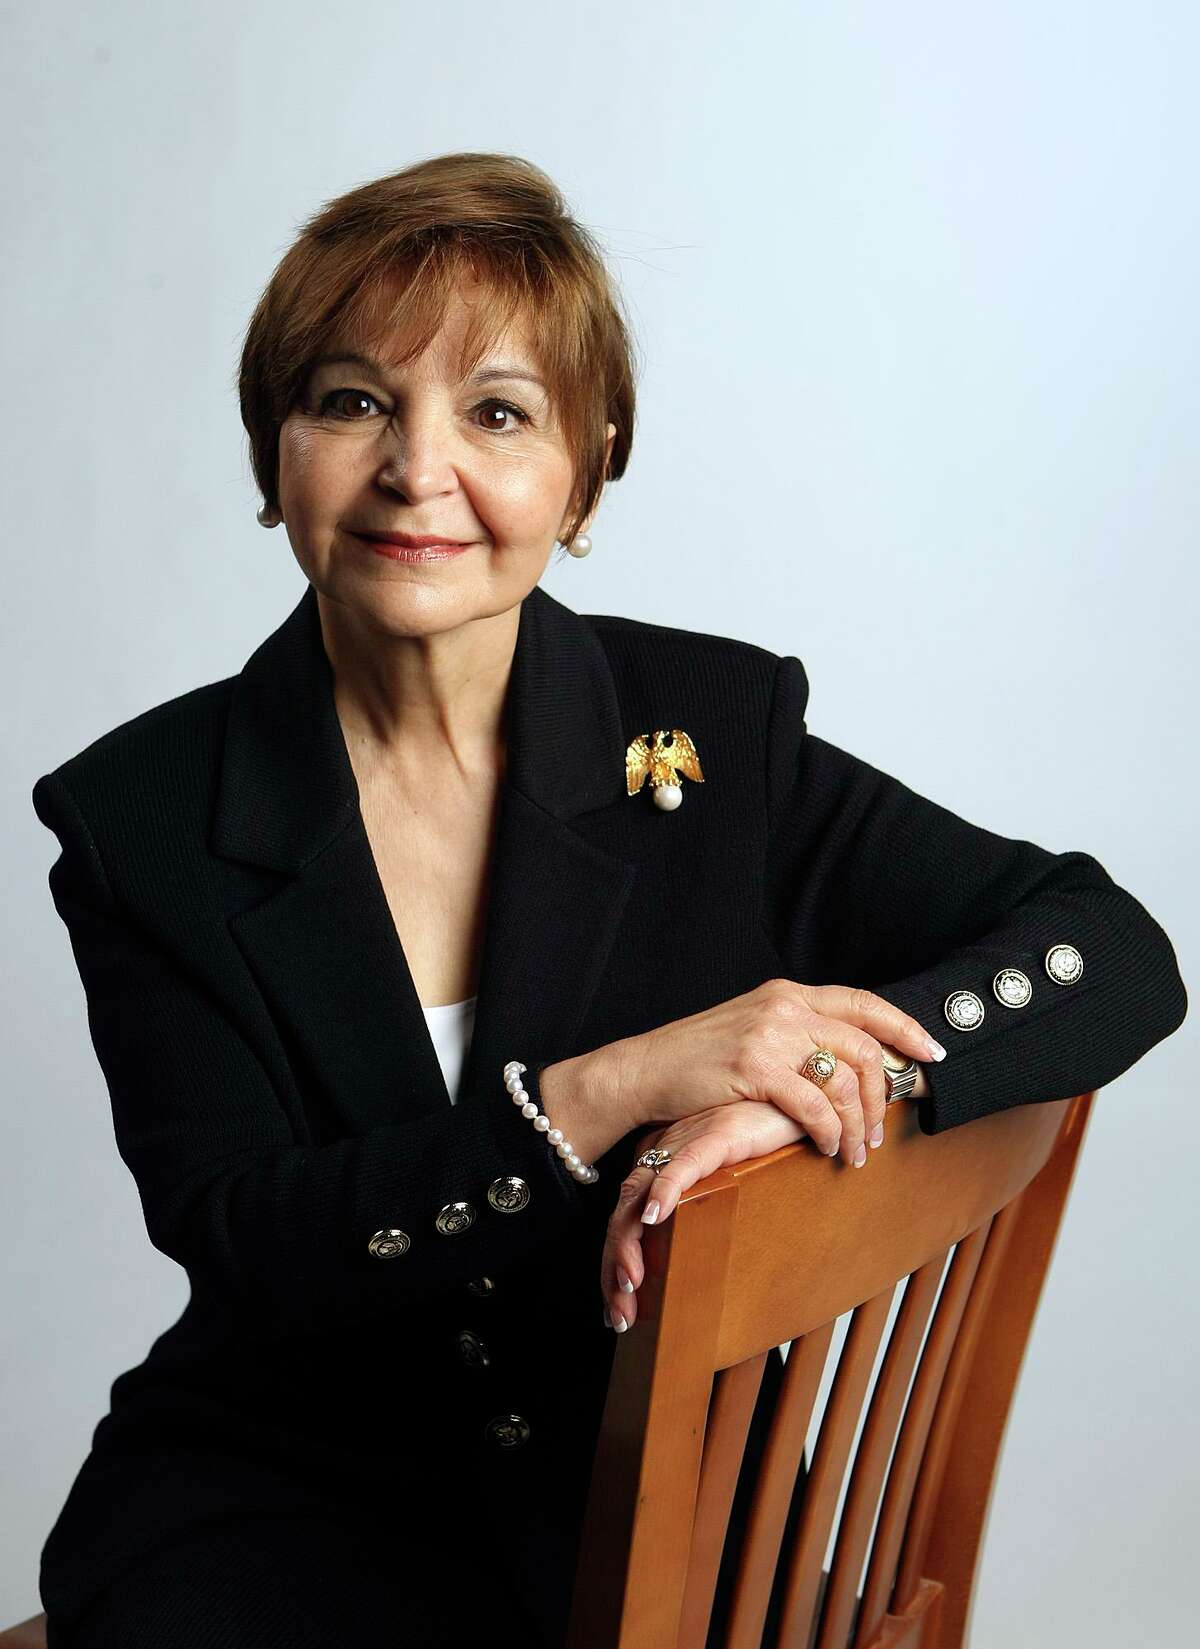 Dr. Maria Hernandez Ferrier